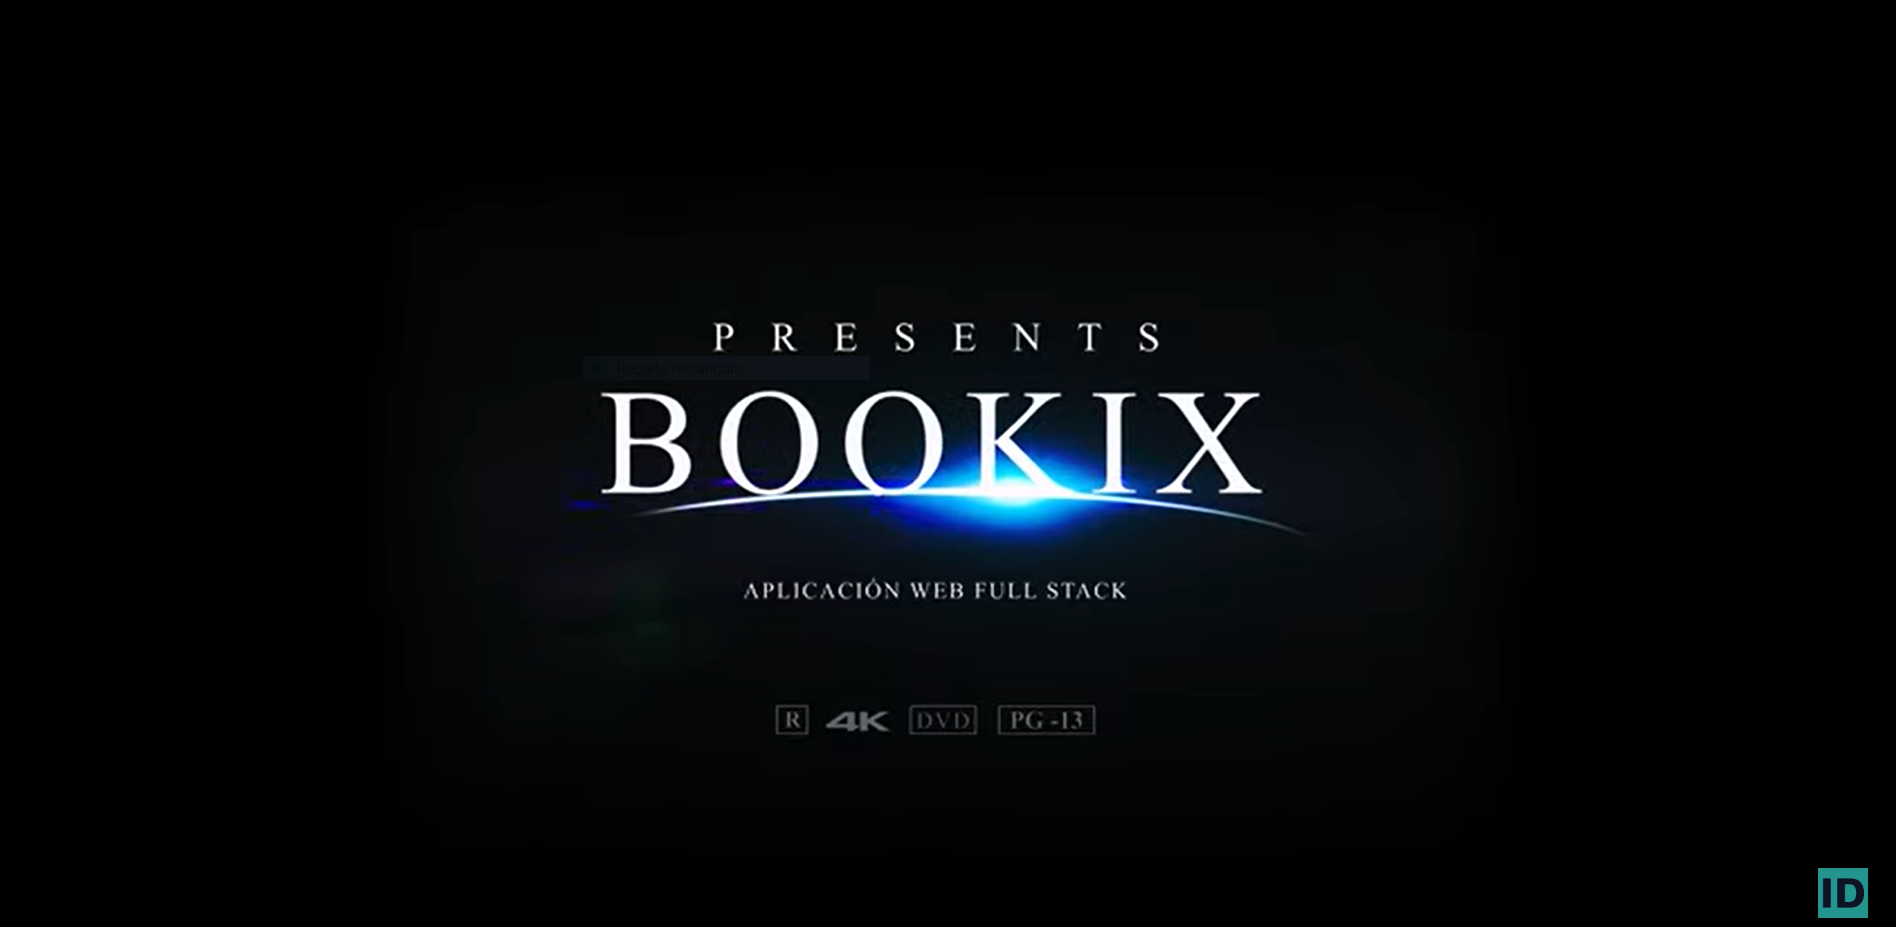 Proyecto de full stack - Bookix - ID Bootcamps